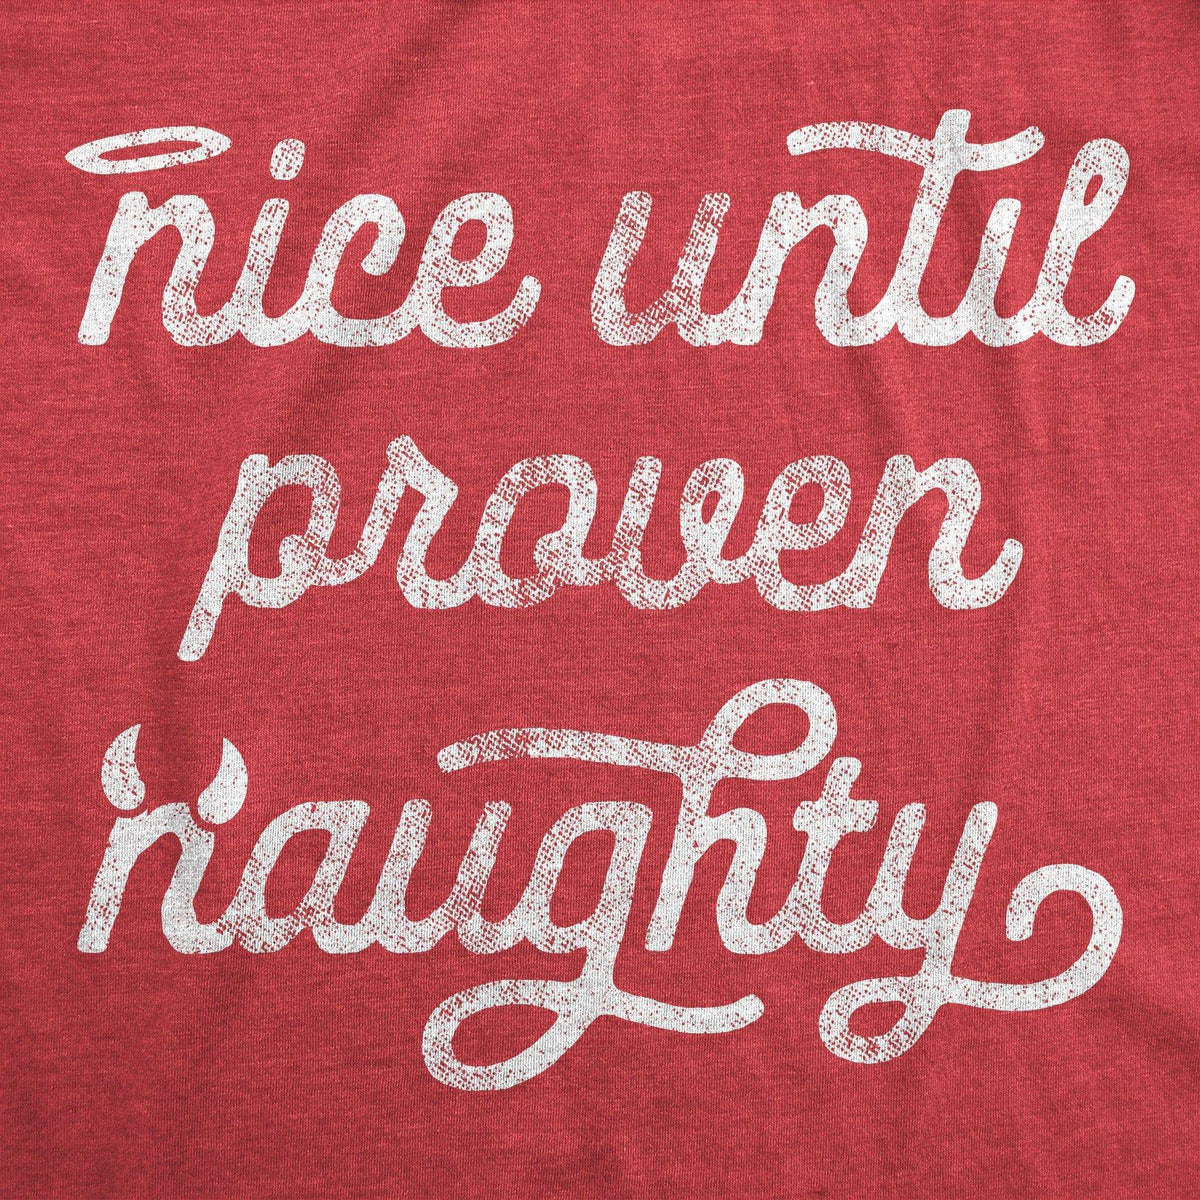 Nice Until Proven Naughty Women&#39;s Tshirt - Crazy Dog T-Shirts